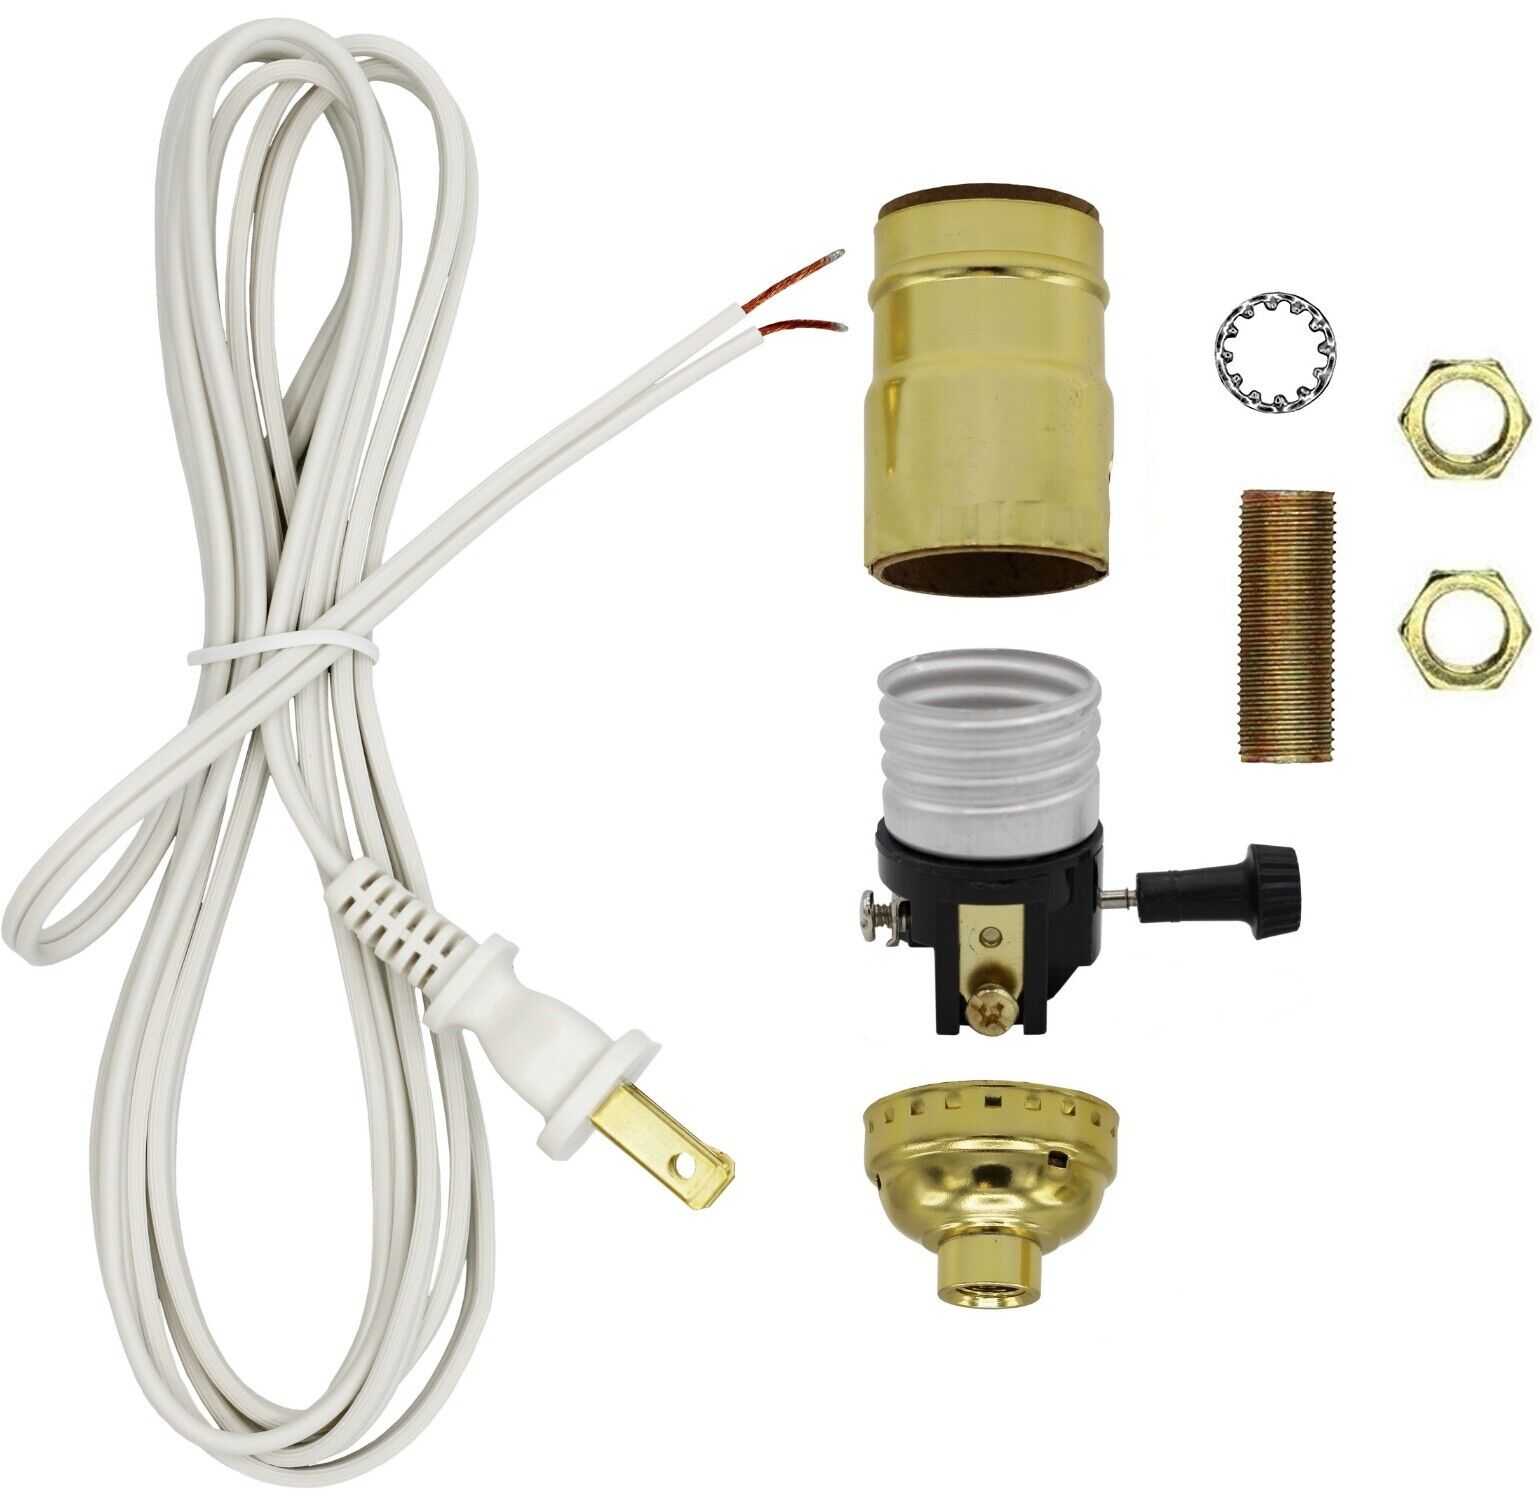 Make a Lamp or Repair Kit - All Essential Hardware, 3 Way Socket - Gold